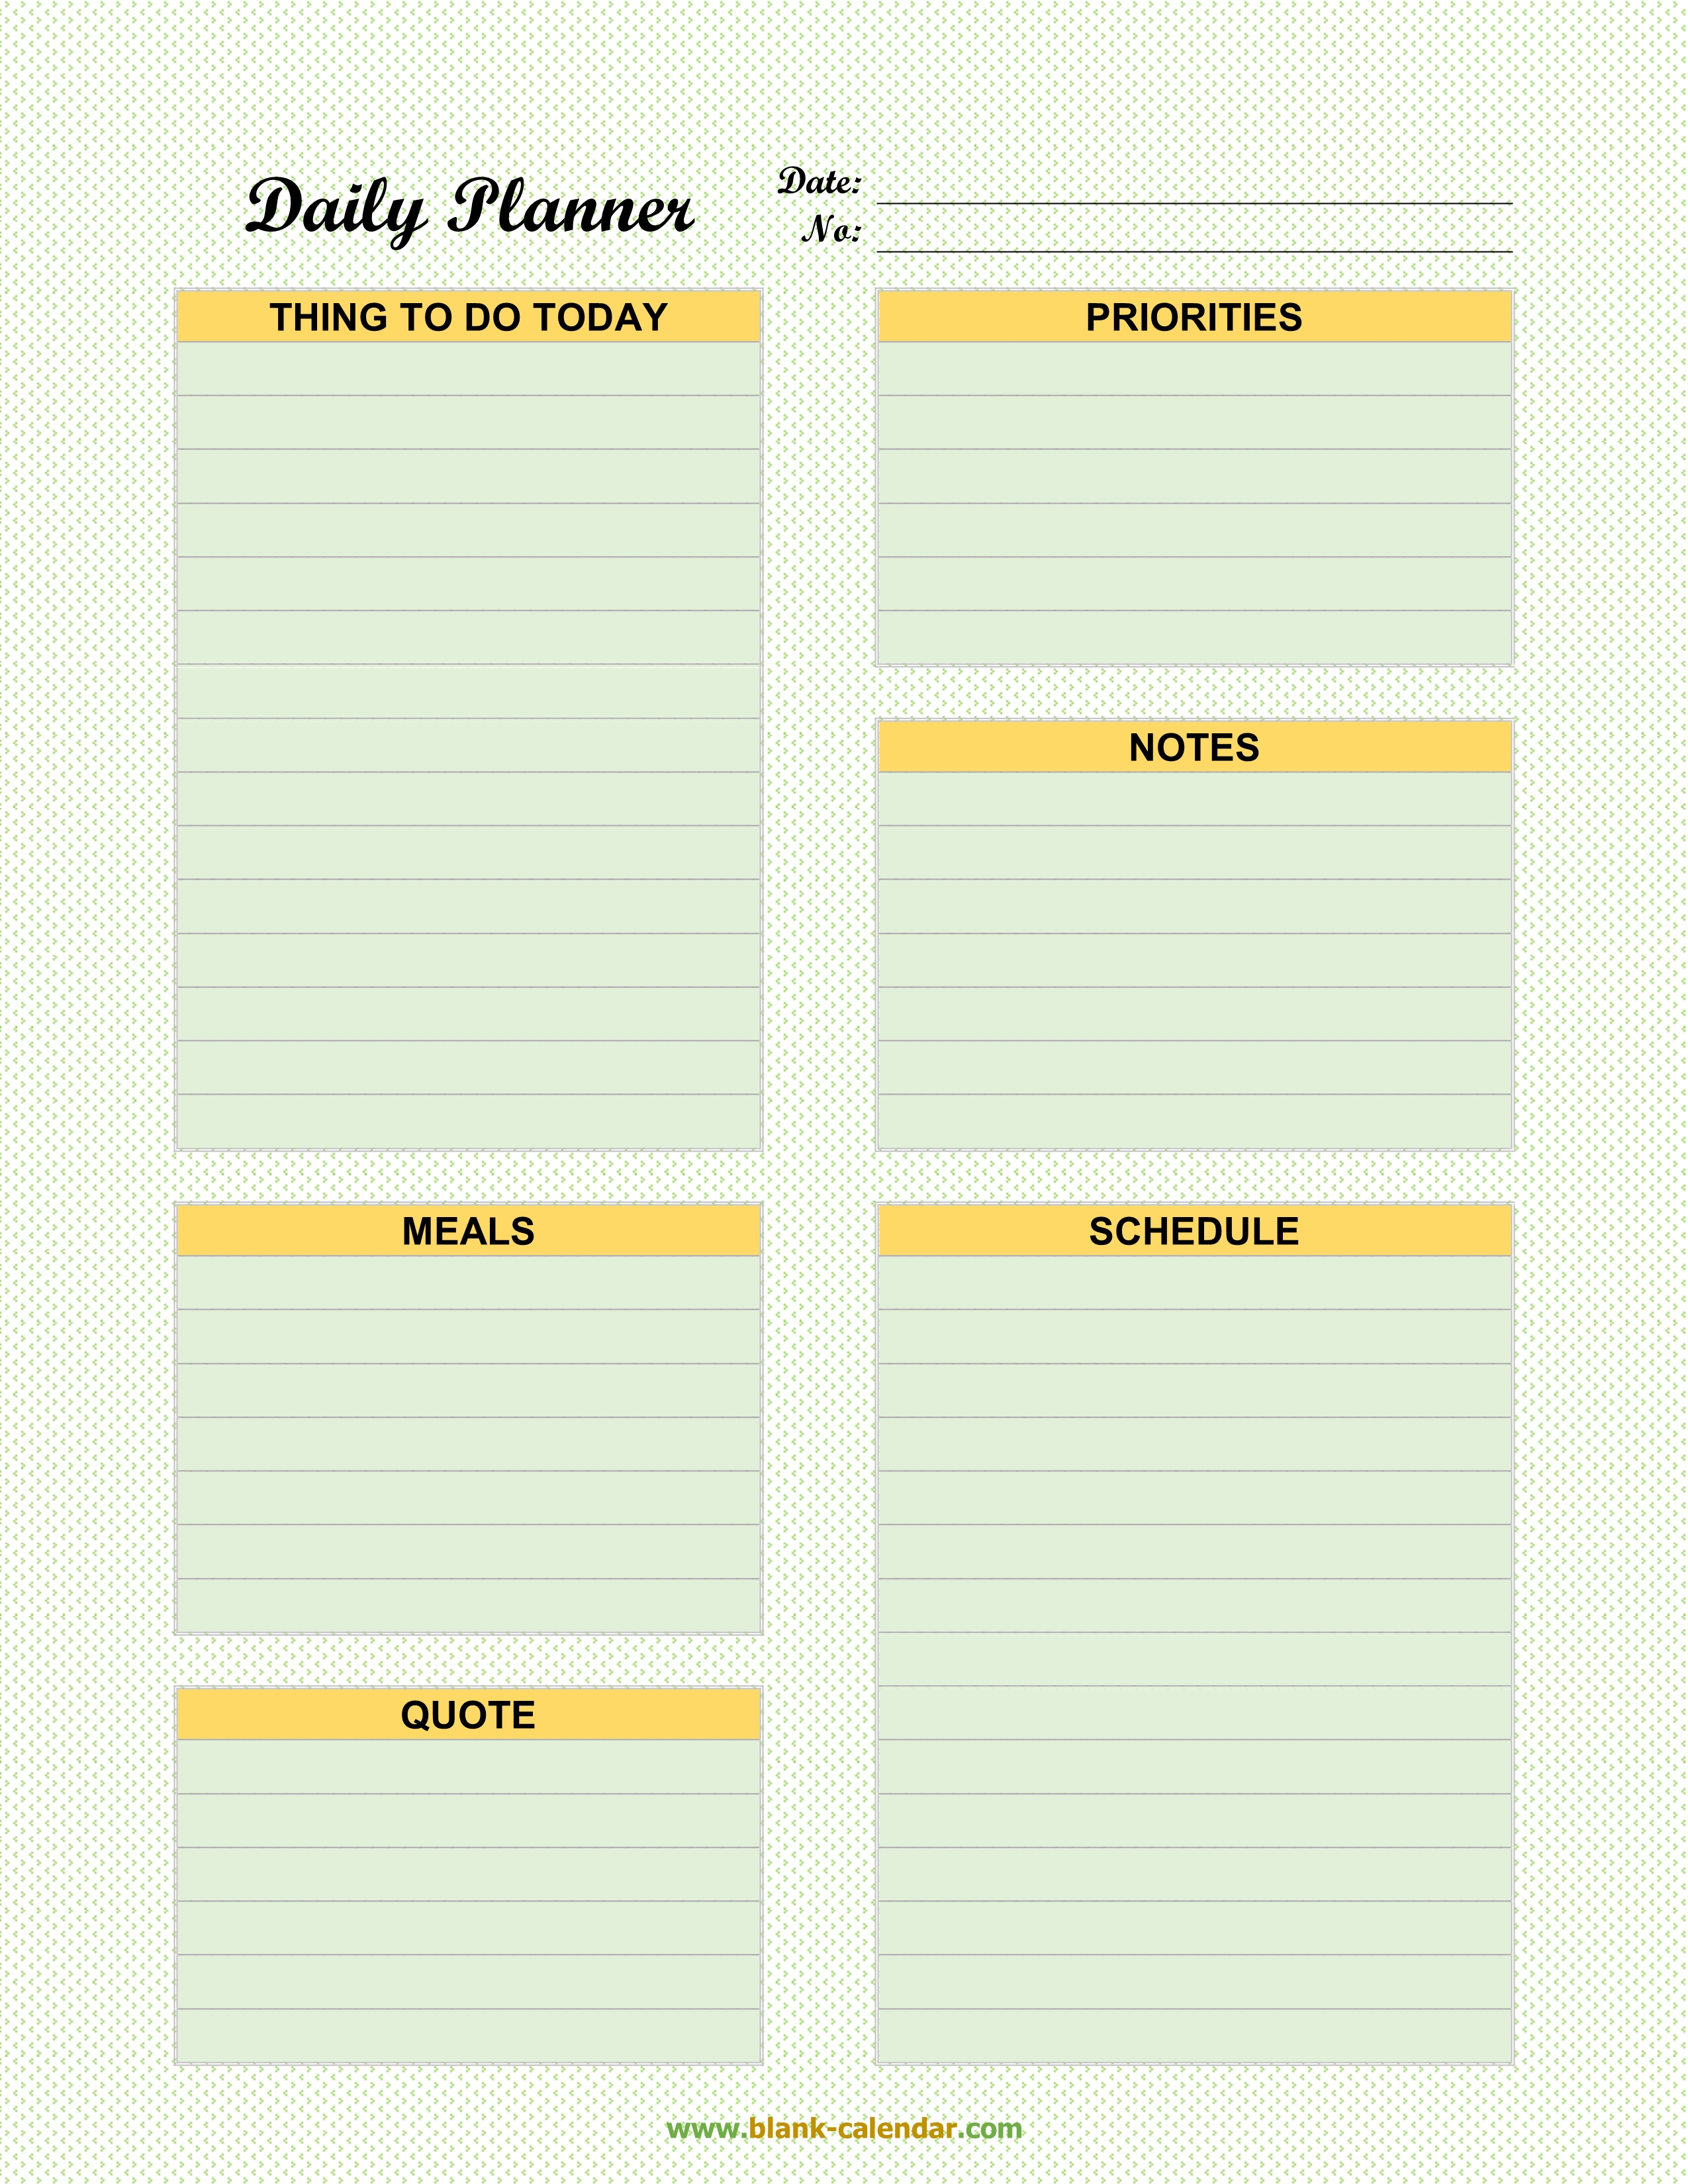 pdf daily schedule